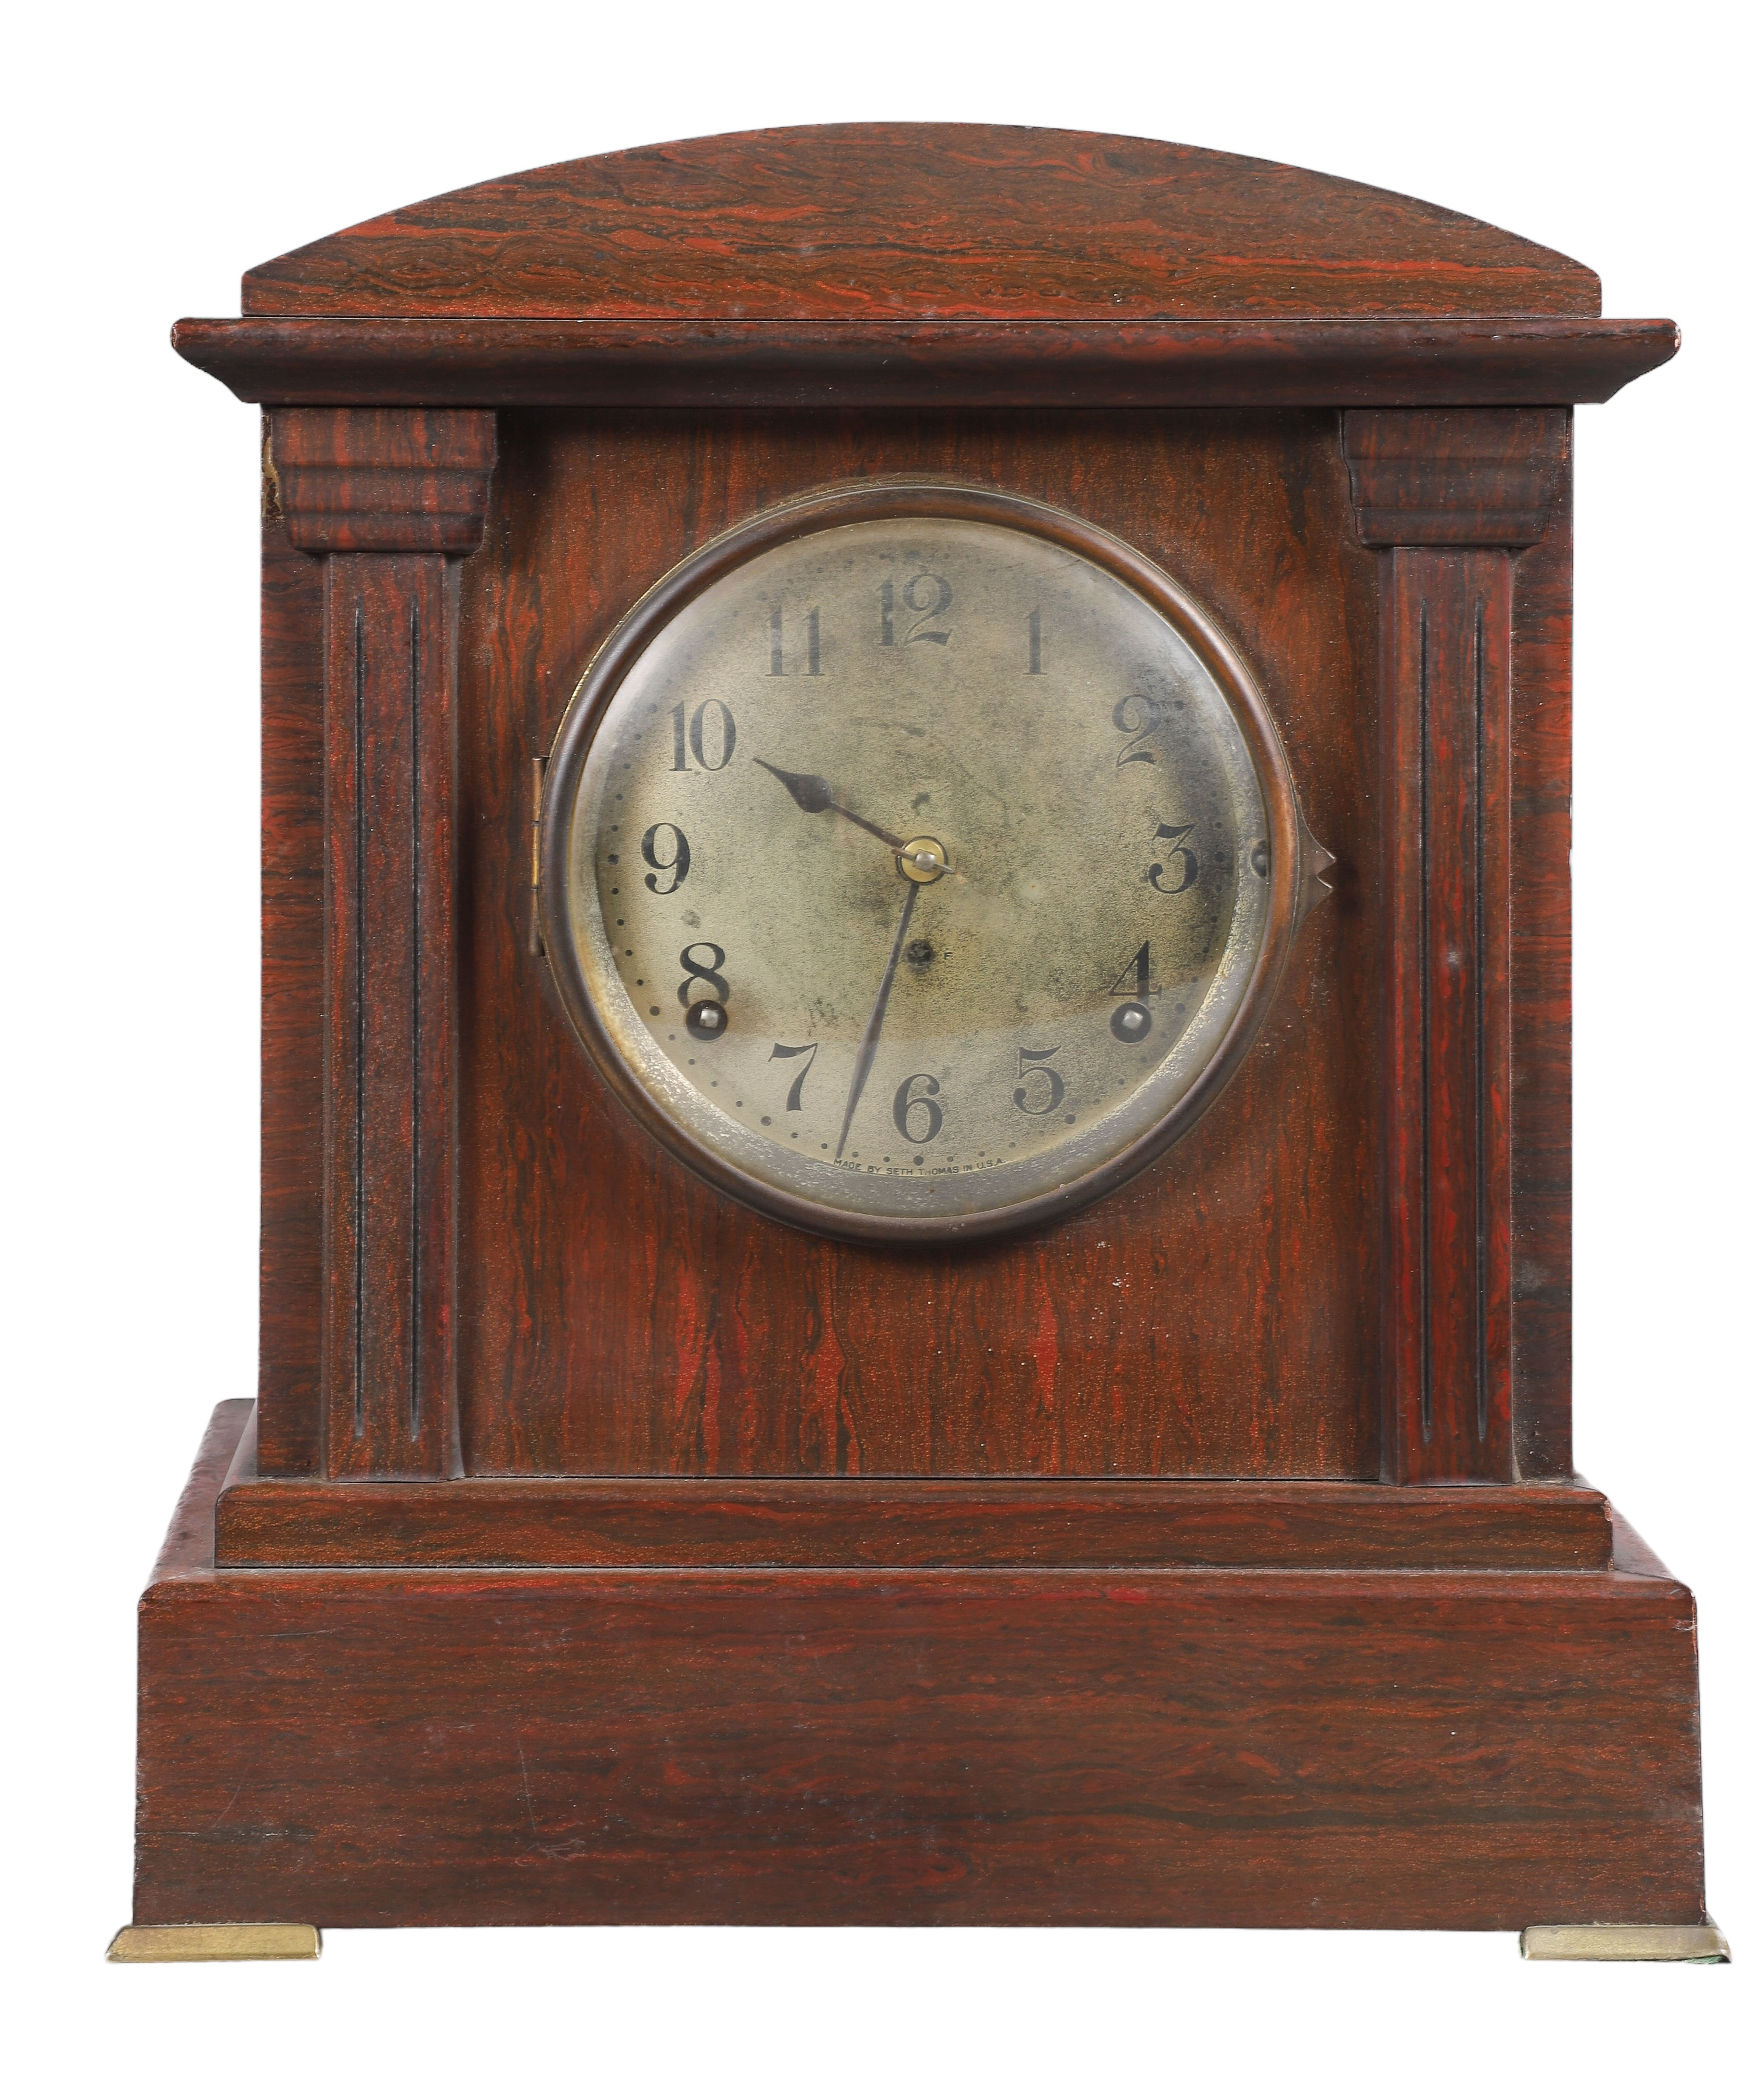 Seth Thomas mantel clock, with